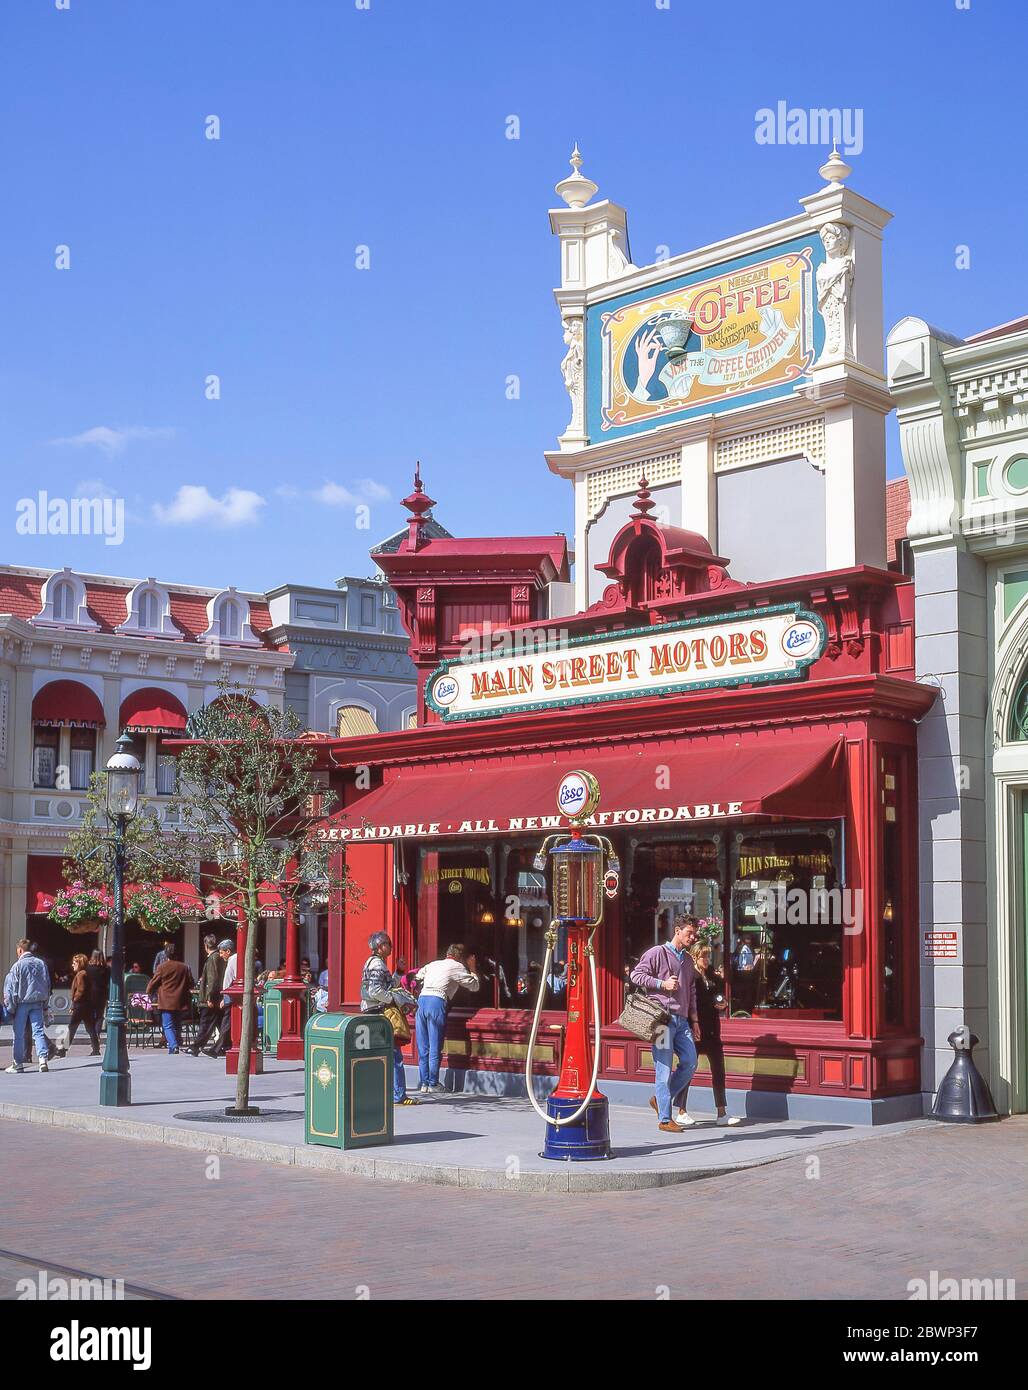 Main Street Motors, main Street USA, Disneyland Park, Disneyland Paris, Marne-la-Vallée, Île-de-France, France Banque D'Images